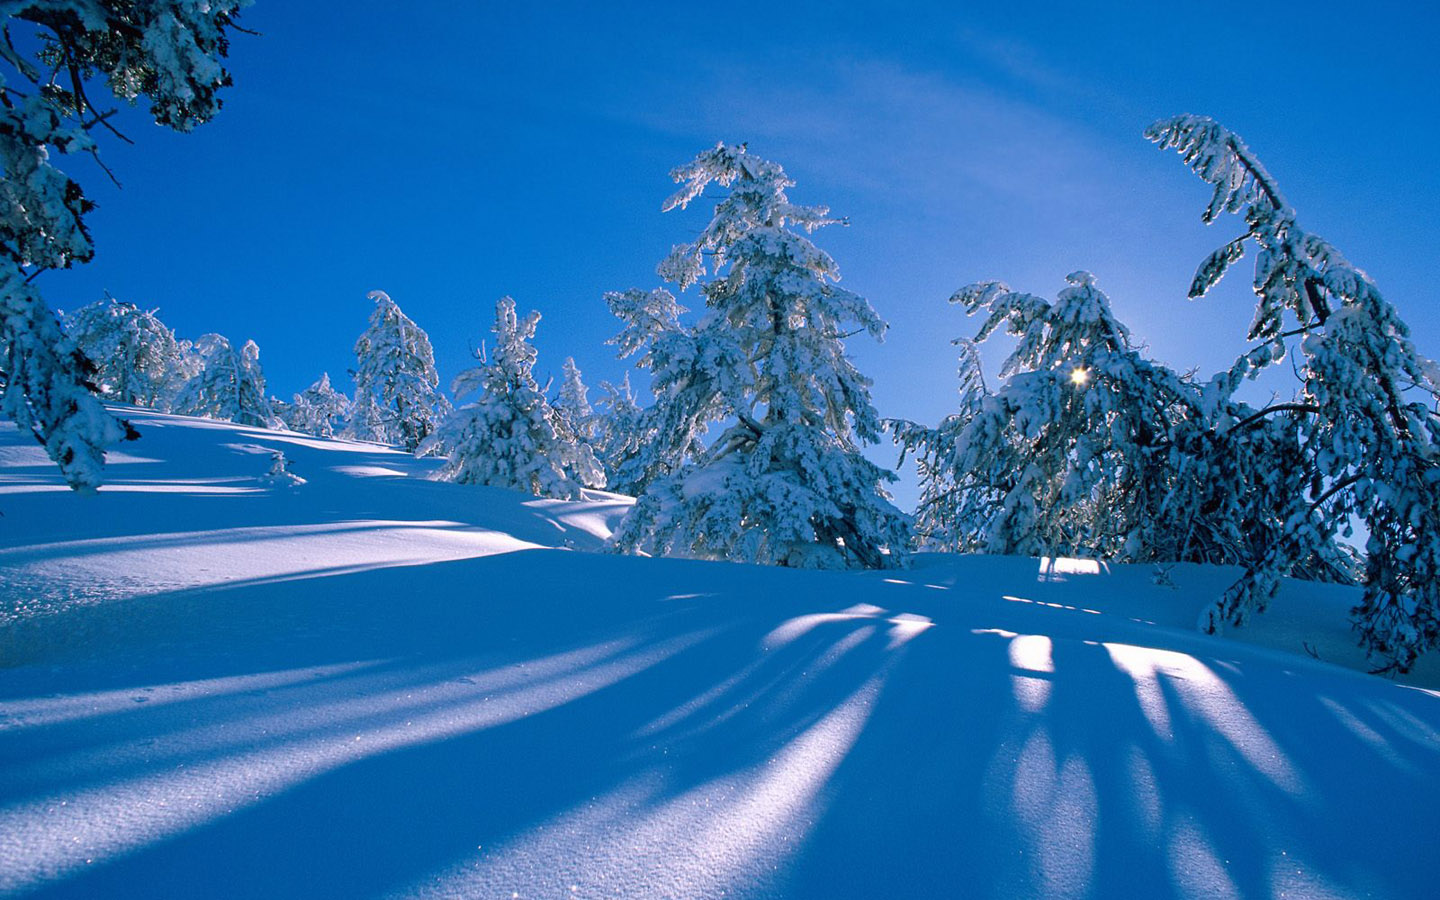 Winter wonderland Dreamy Snow Scene wallpaper 1440x900 1440x900